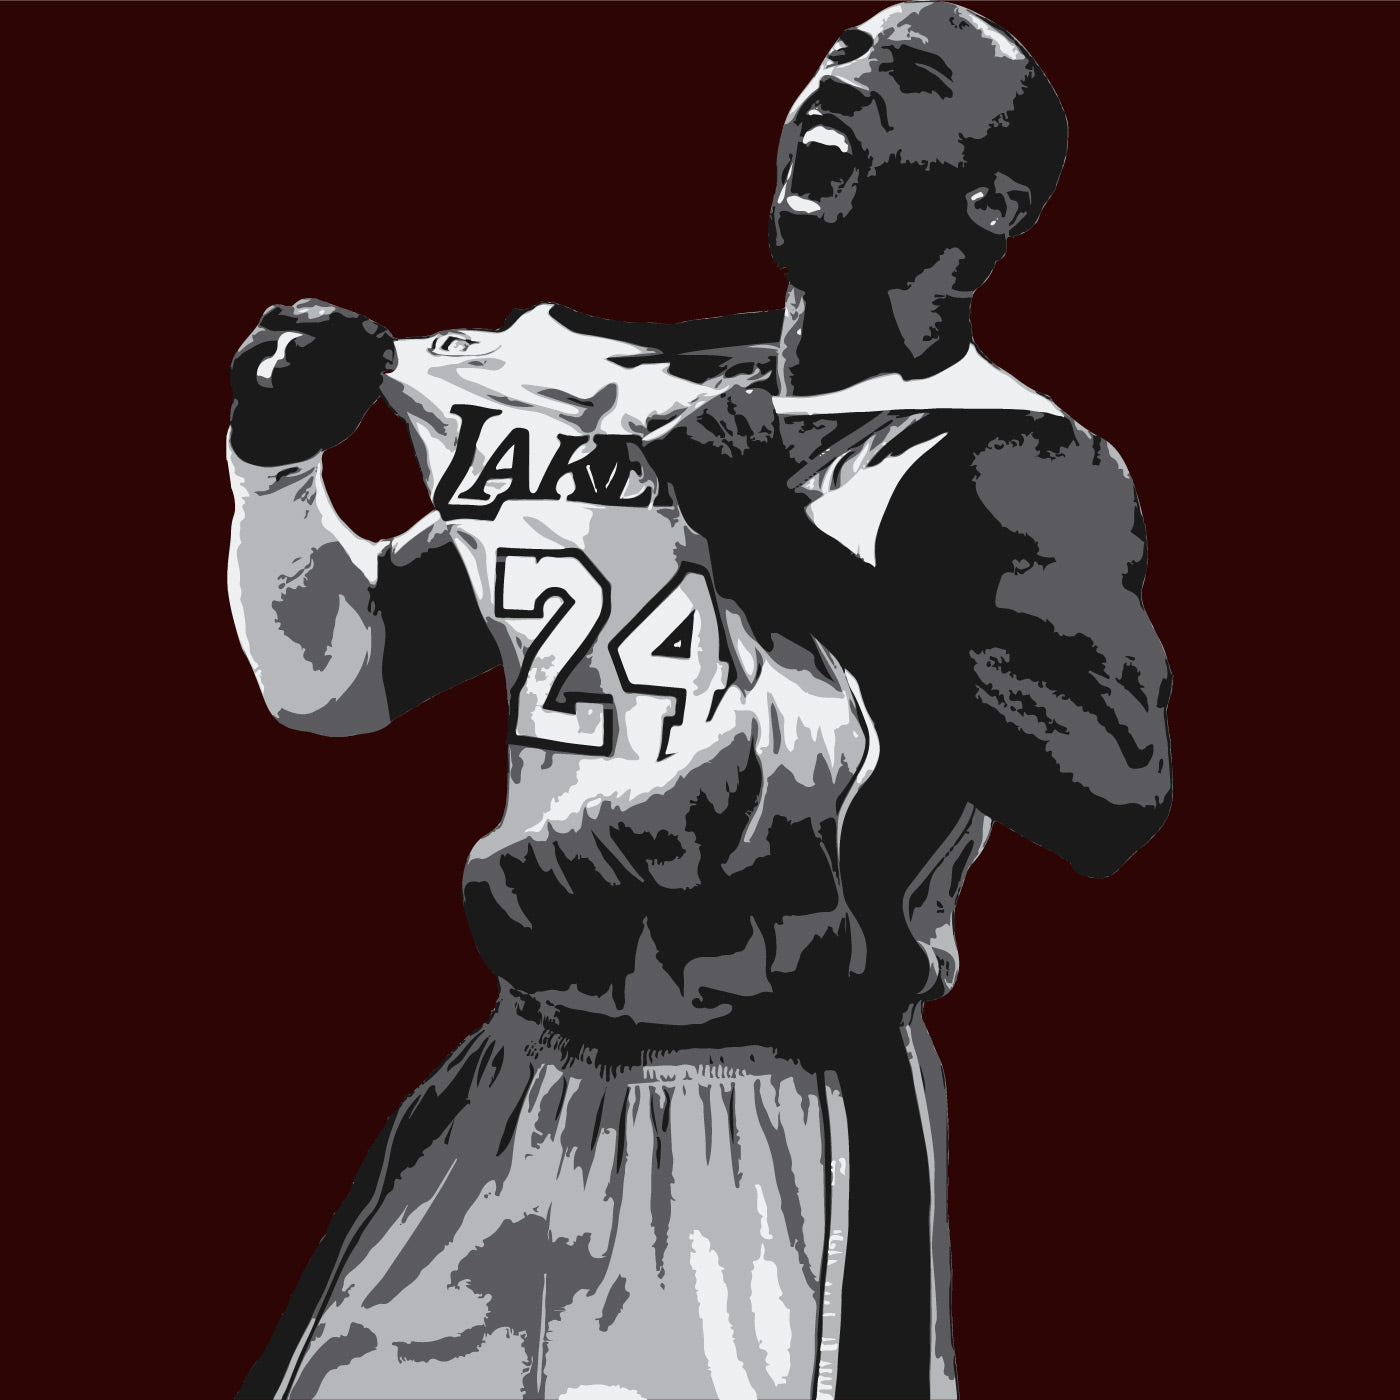 Kobe Bryant "Killer Instinct" Layered Stencil Set